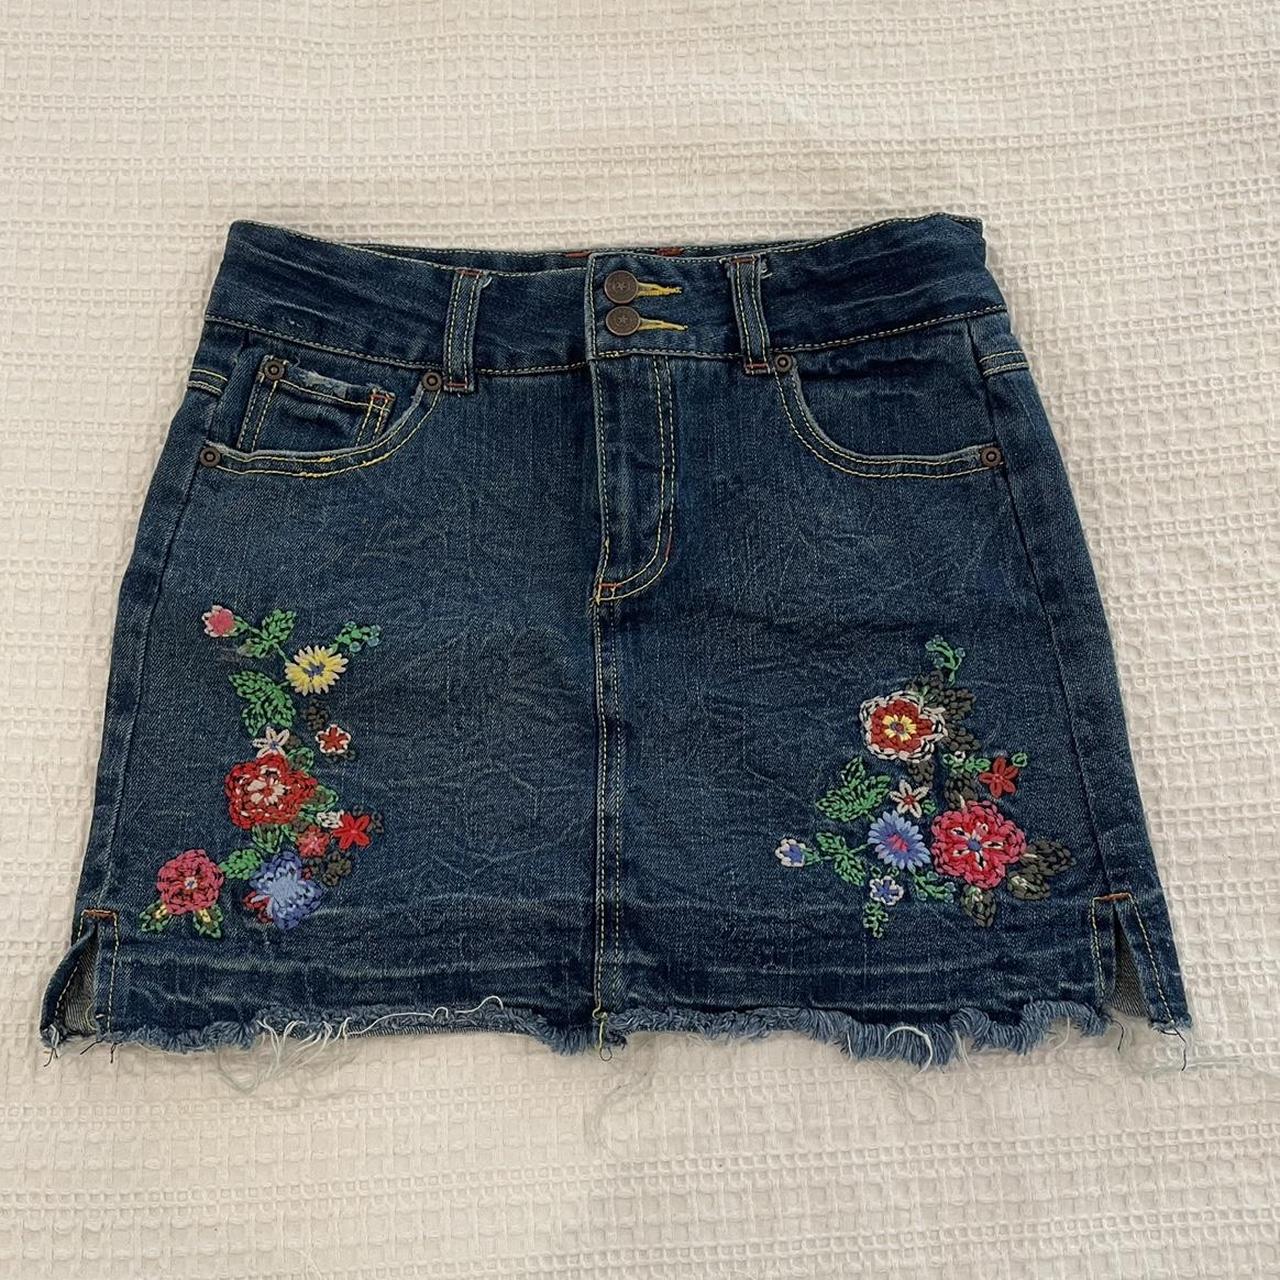 Double button denim mini skirt with floral... - Depop